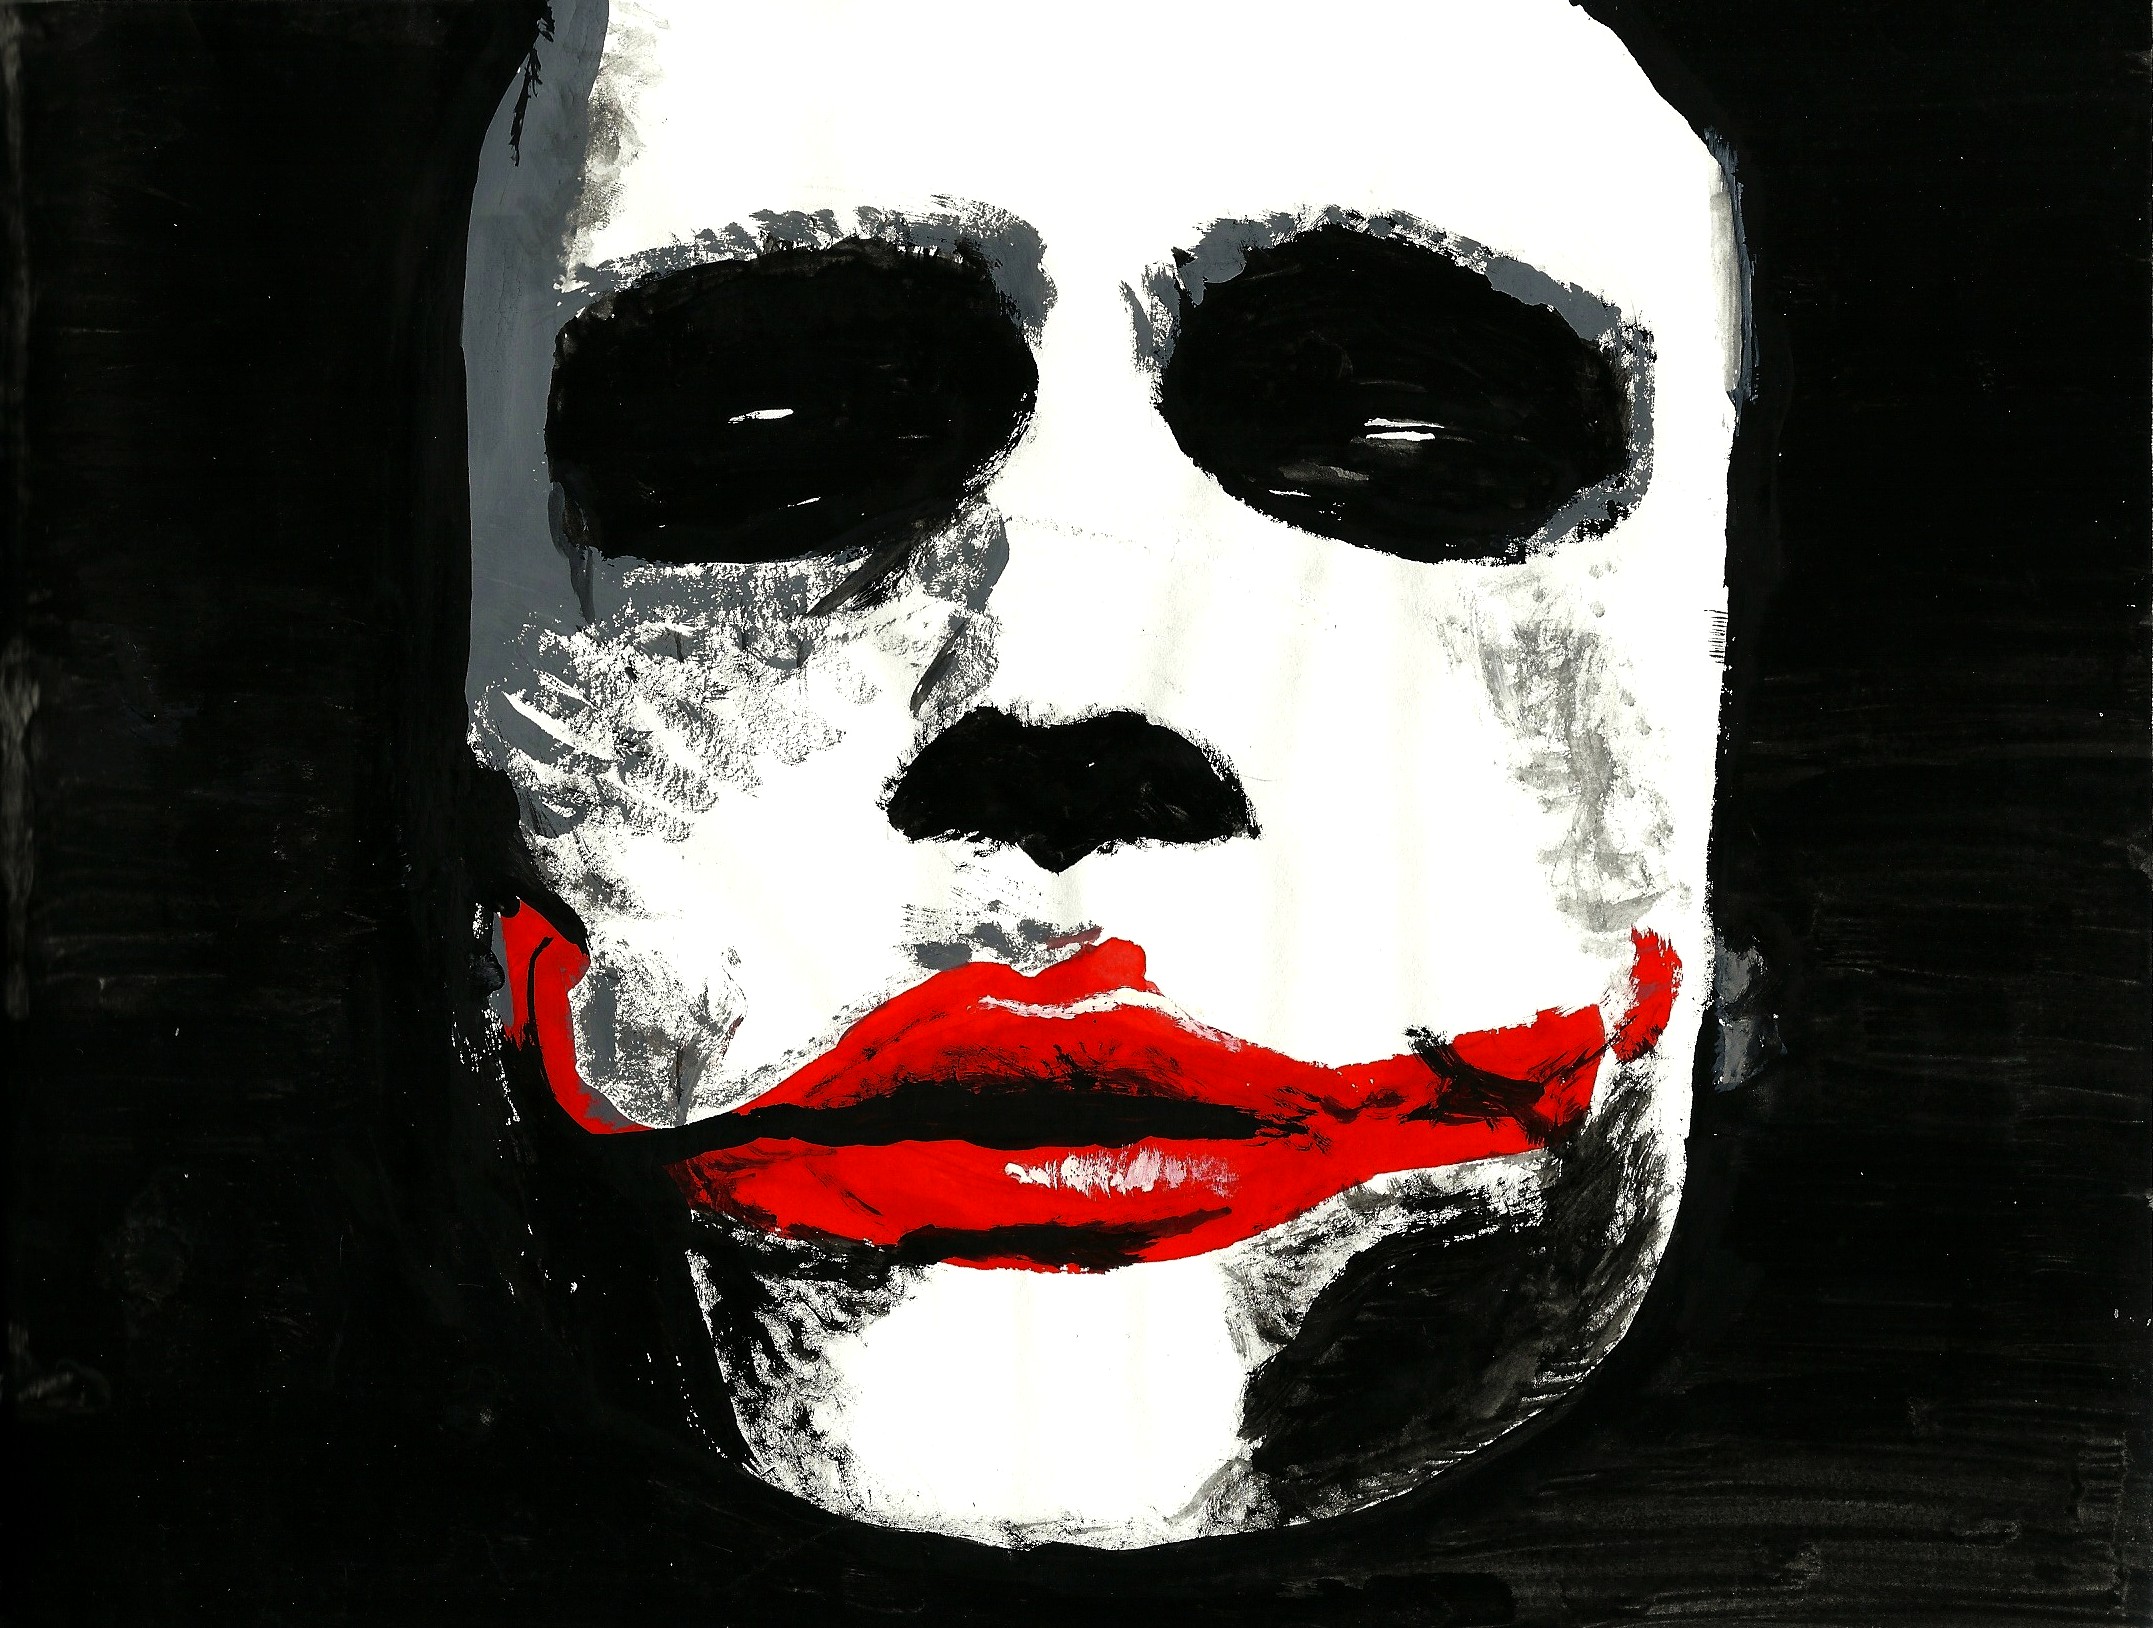 Batman Joker Face Images & Pictures - Becuo